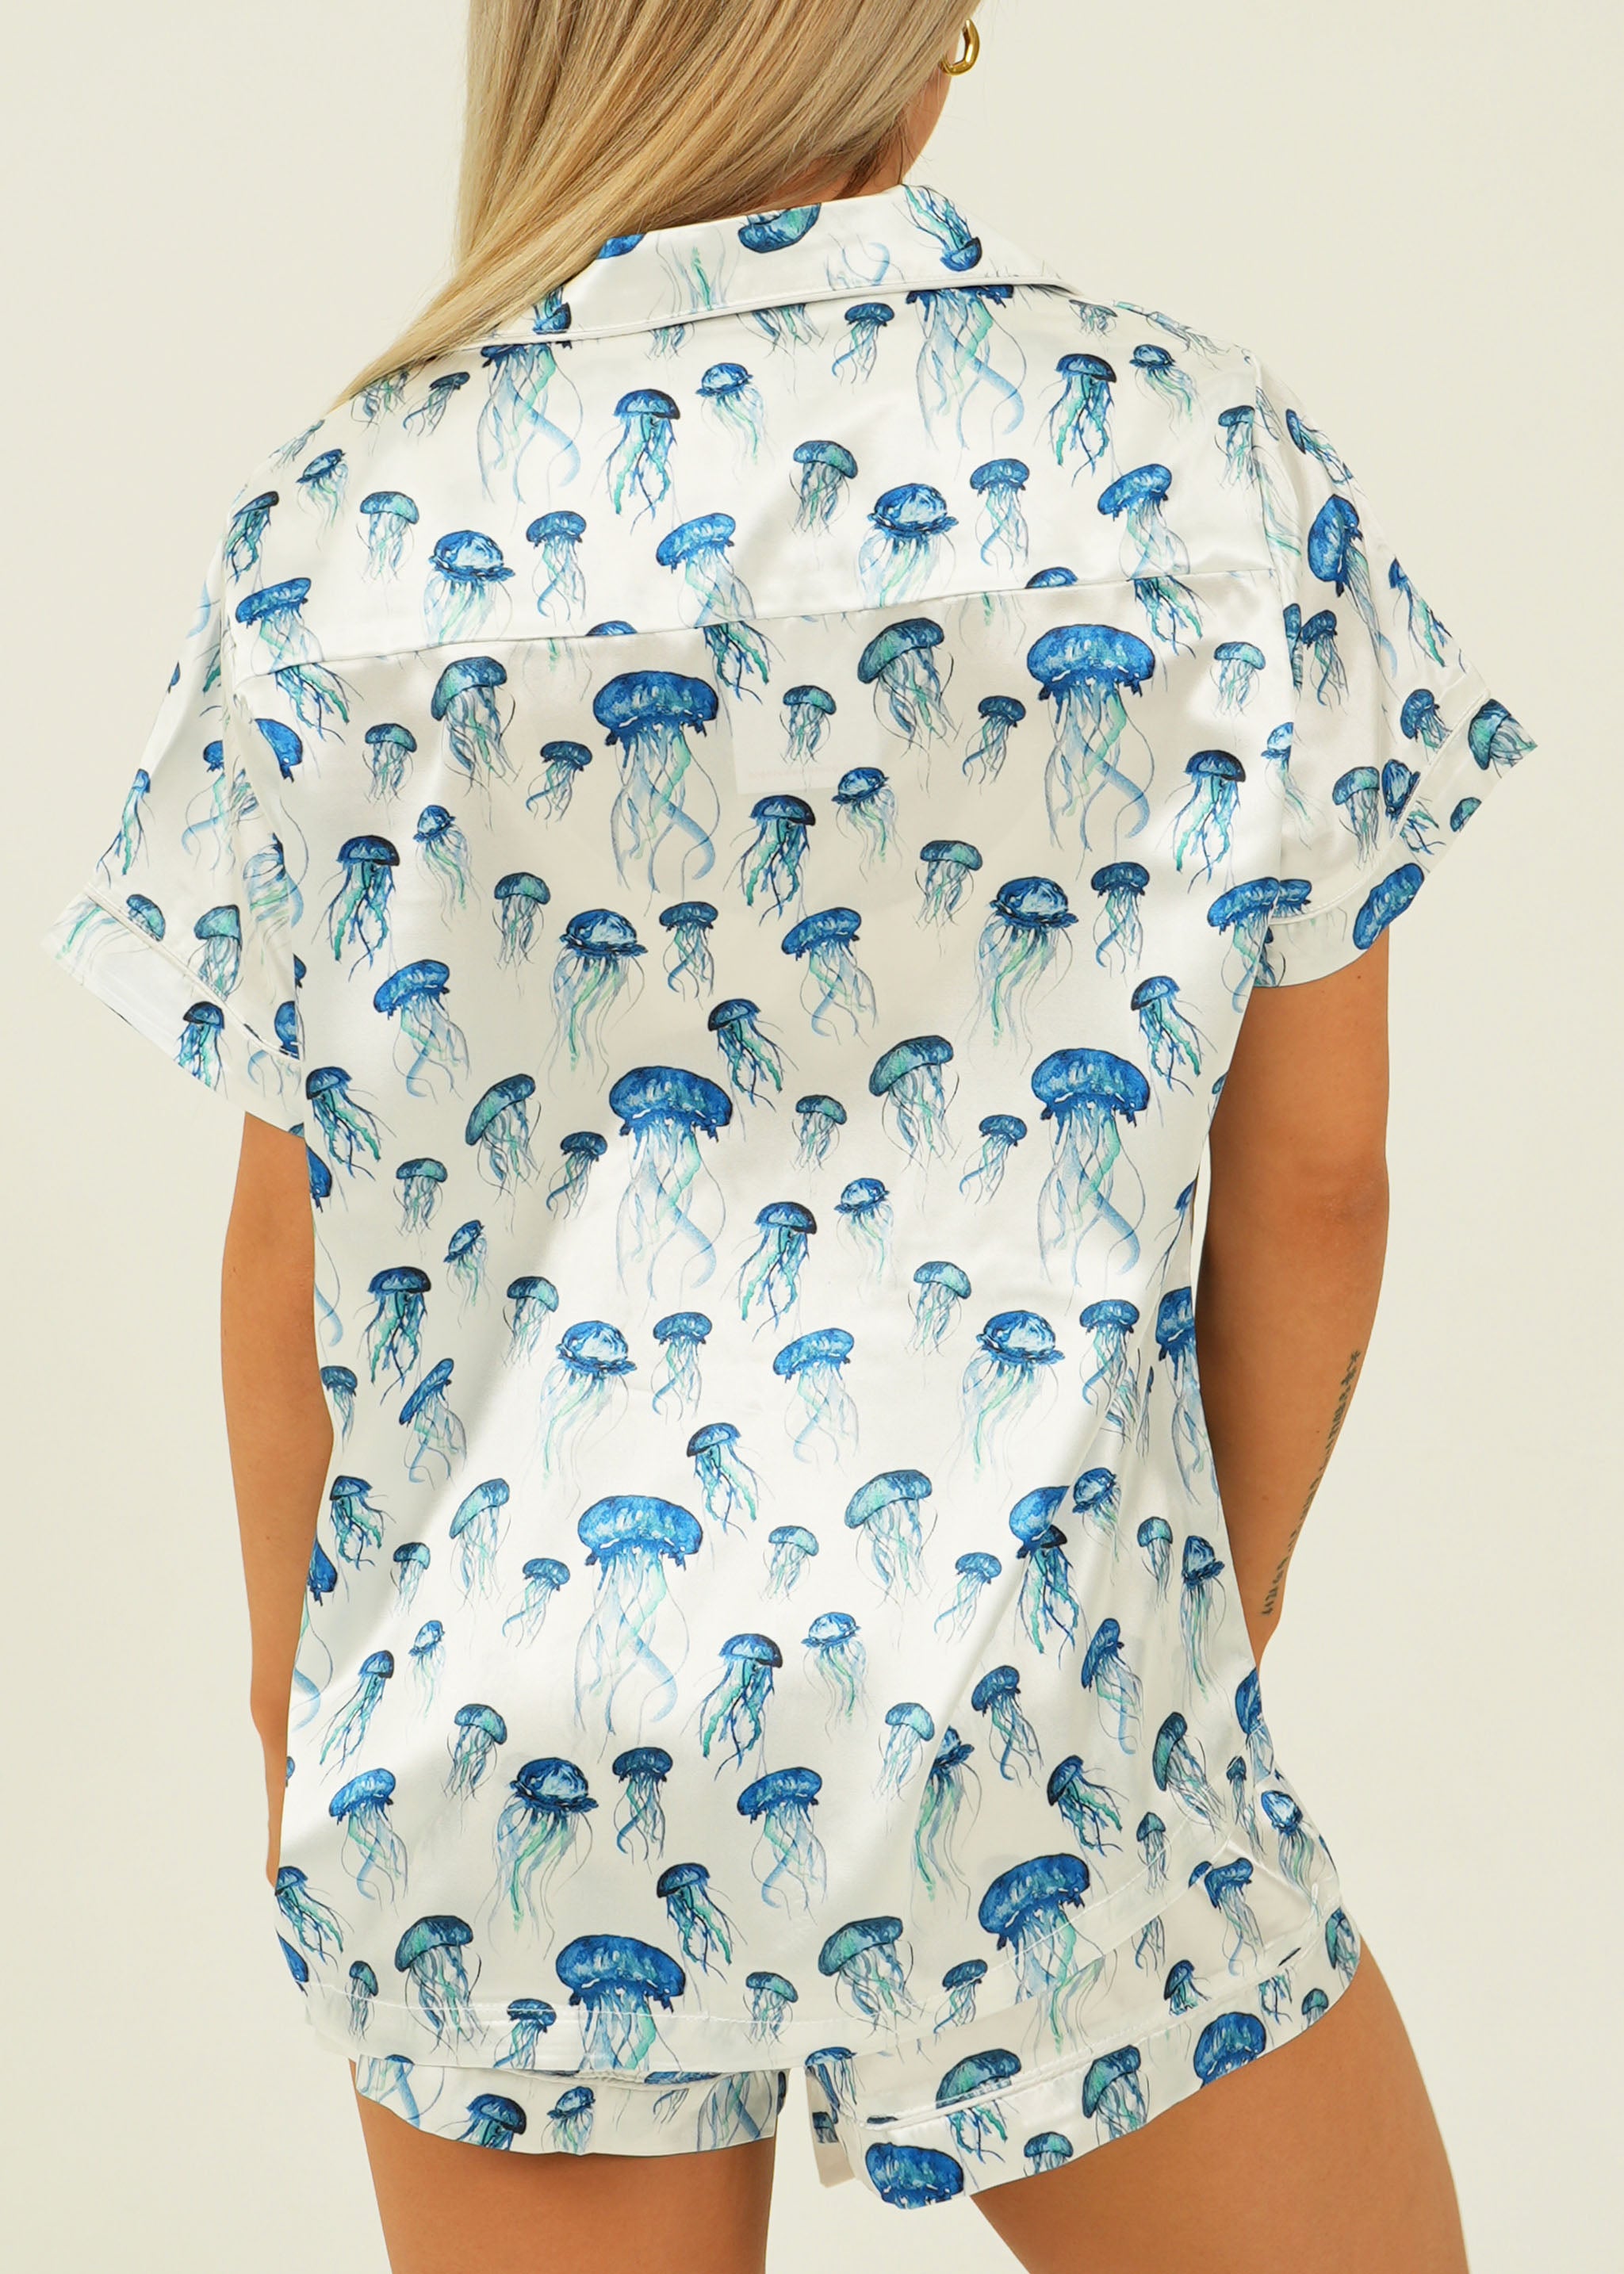 Jellyfish Satin Short Pyjama Set